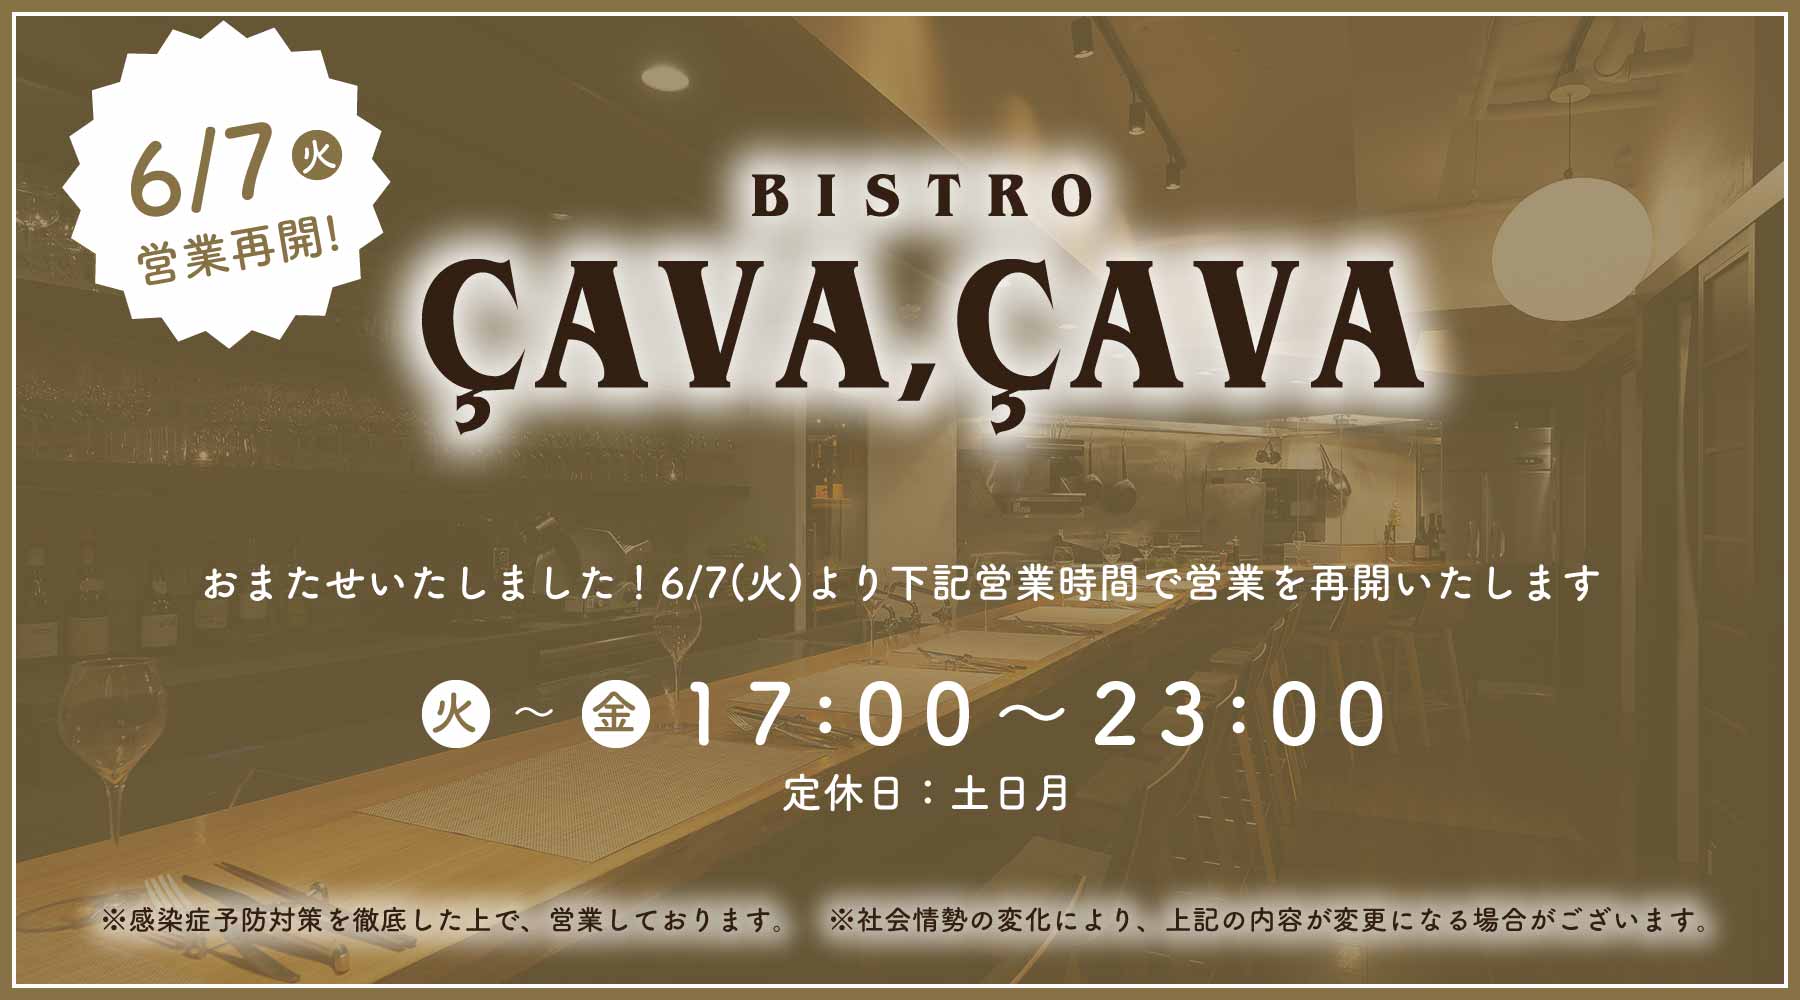 BISTRO CAVA,CAVA 営業再開のお知らせ